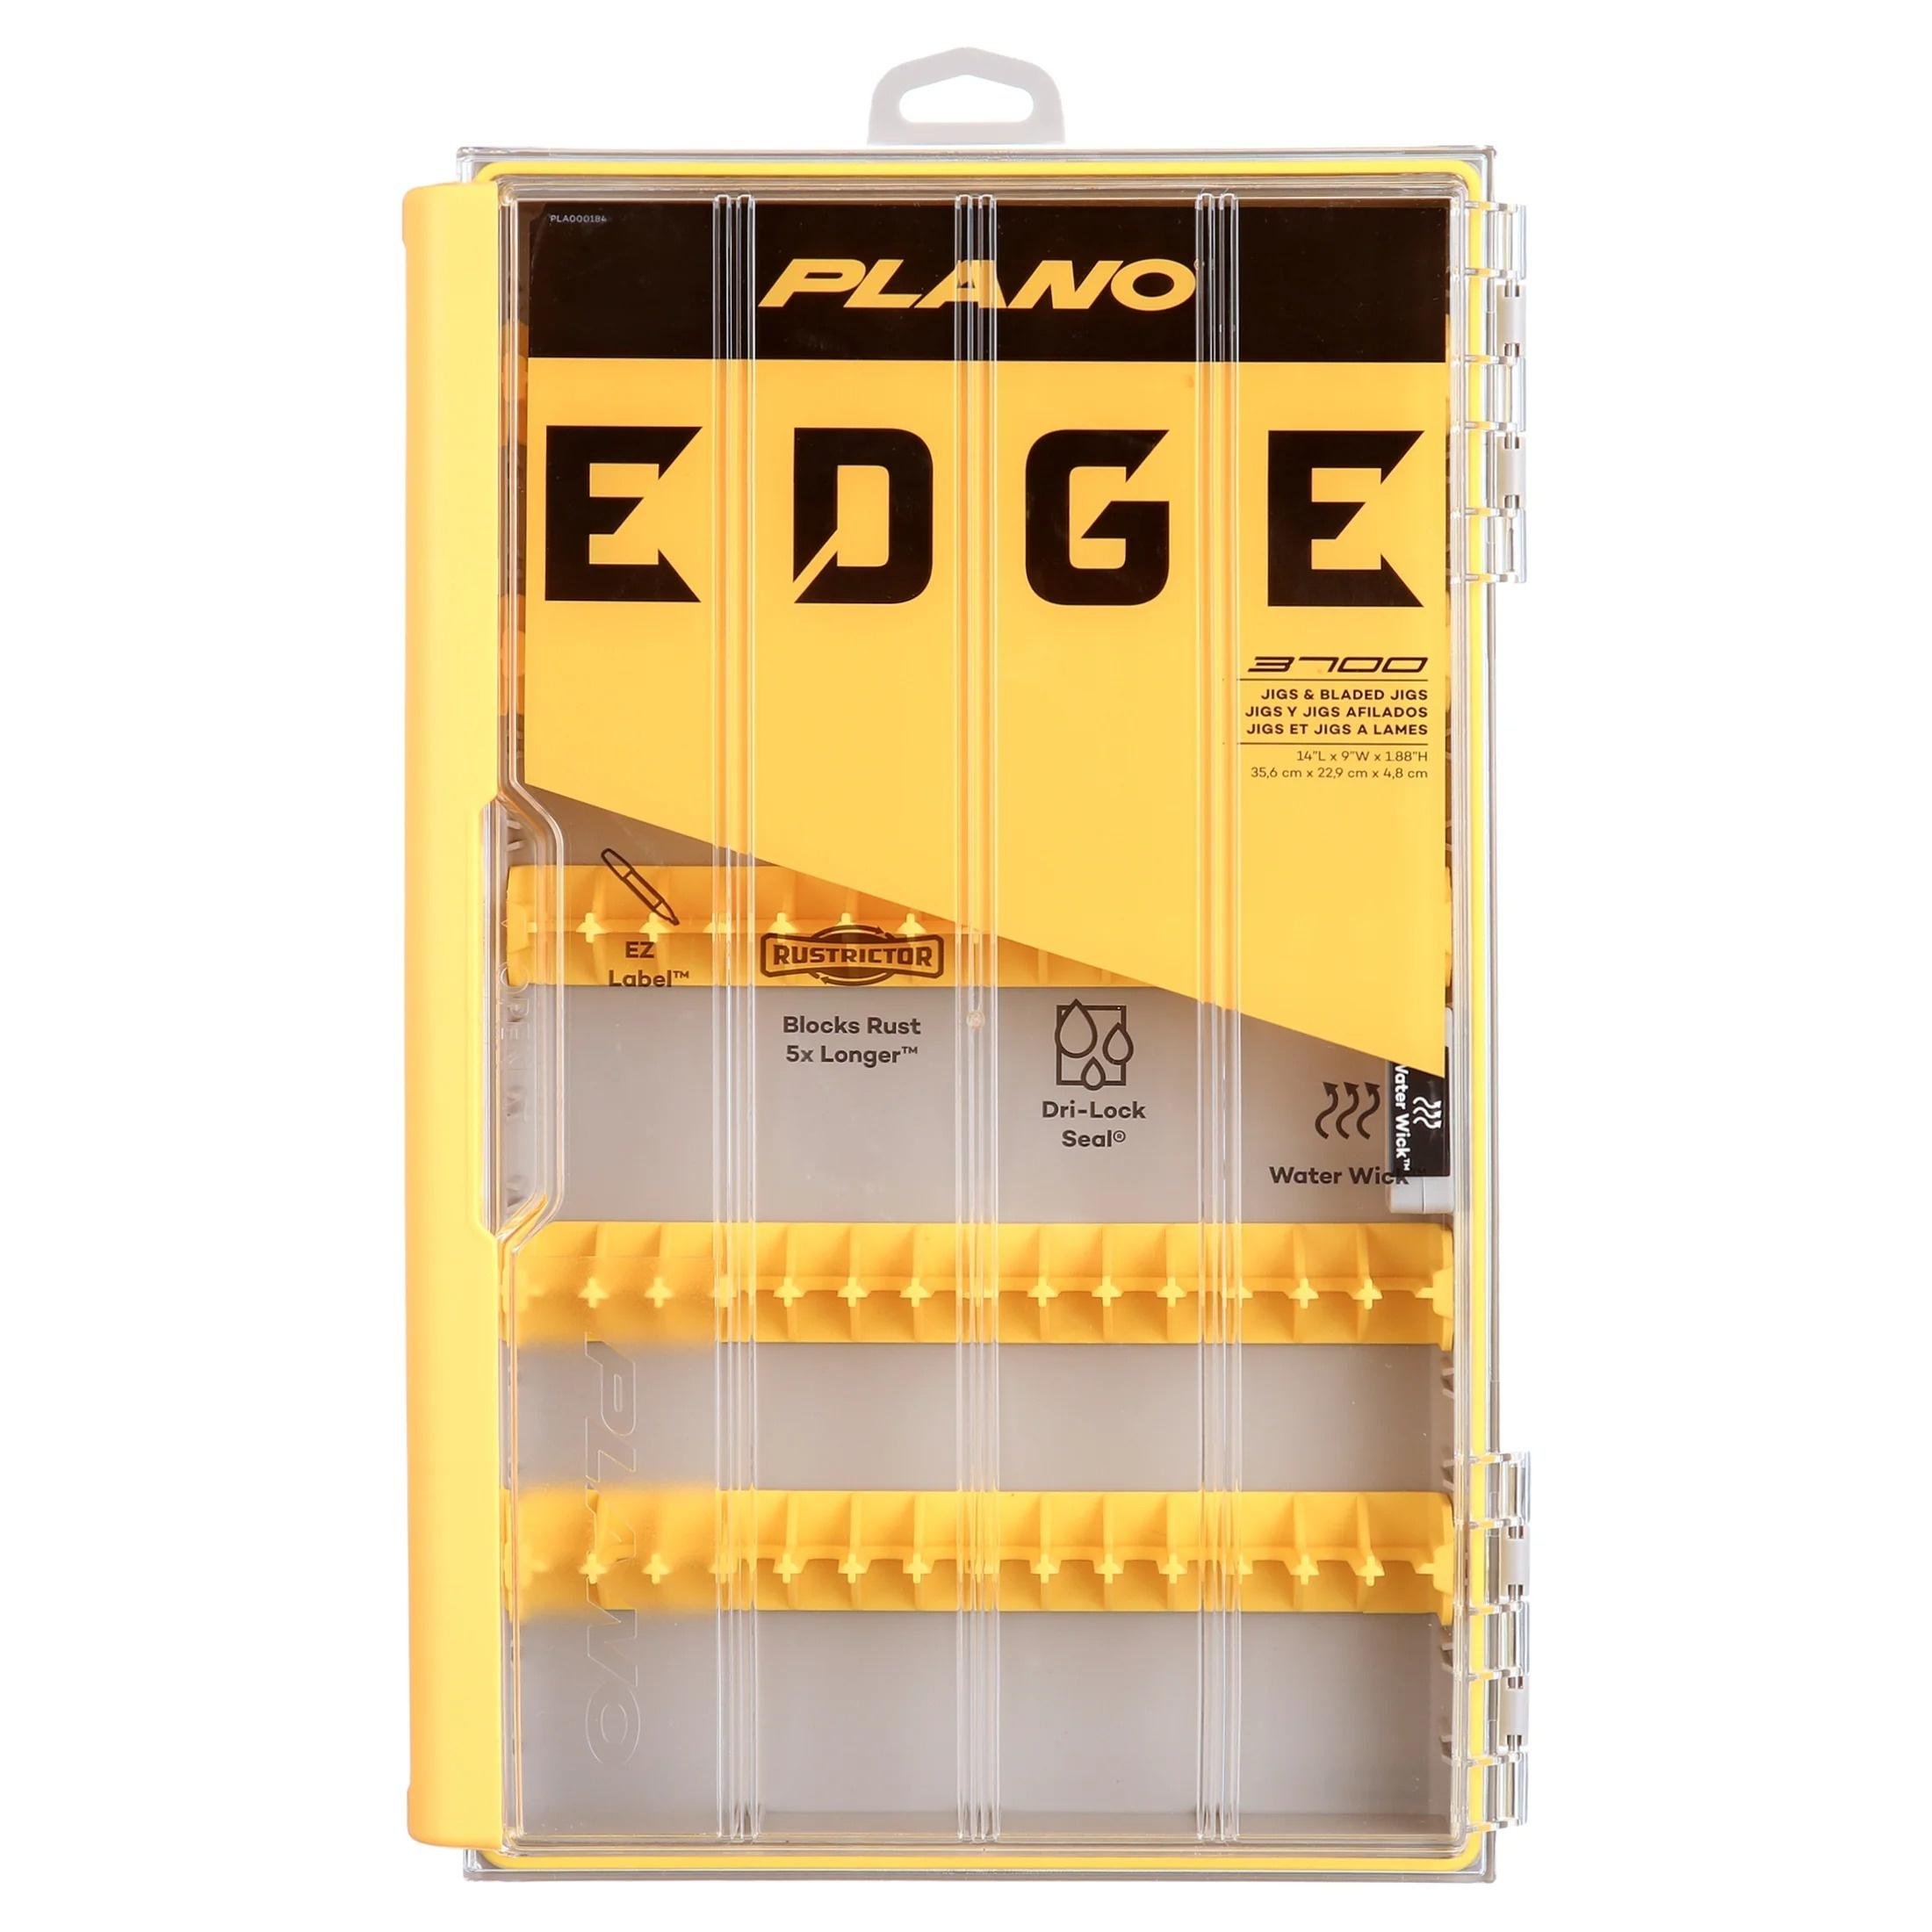 Estojo Edge 3700 PLASE600 Plano p/ Jigs e Blade Jigs